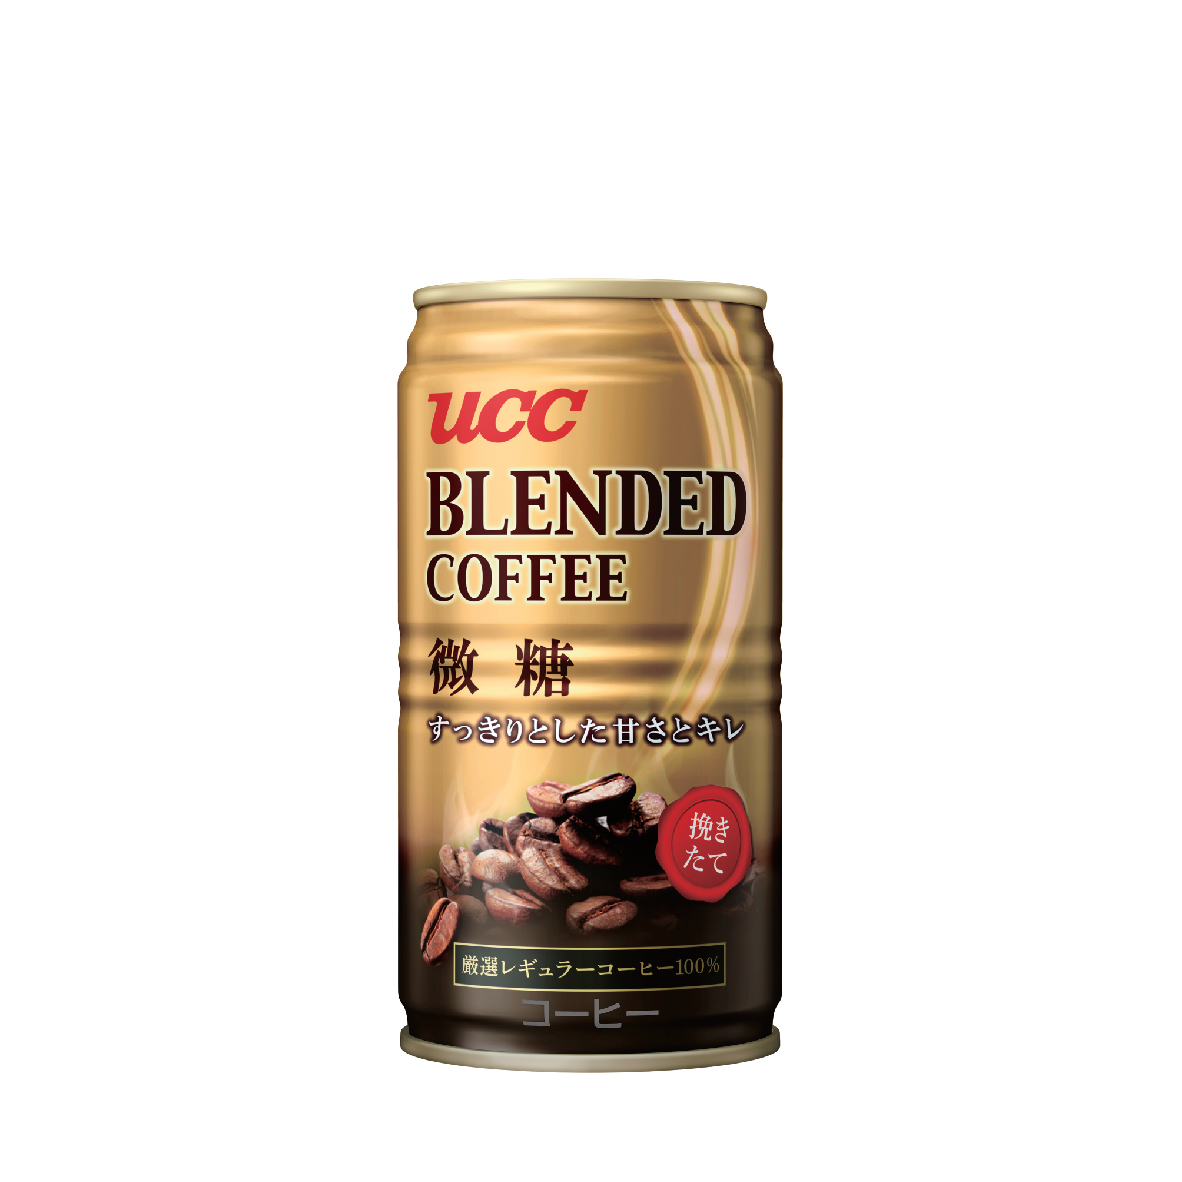 UCC Blended Coffee Less Sugar